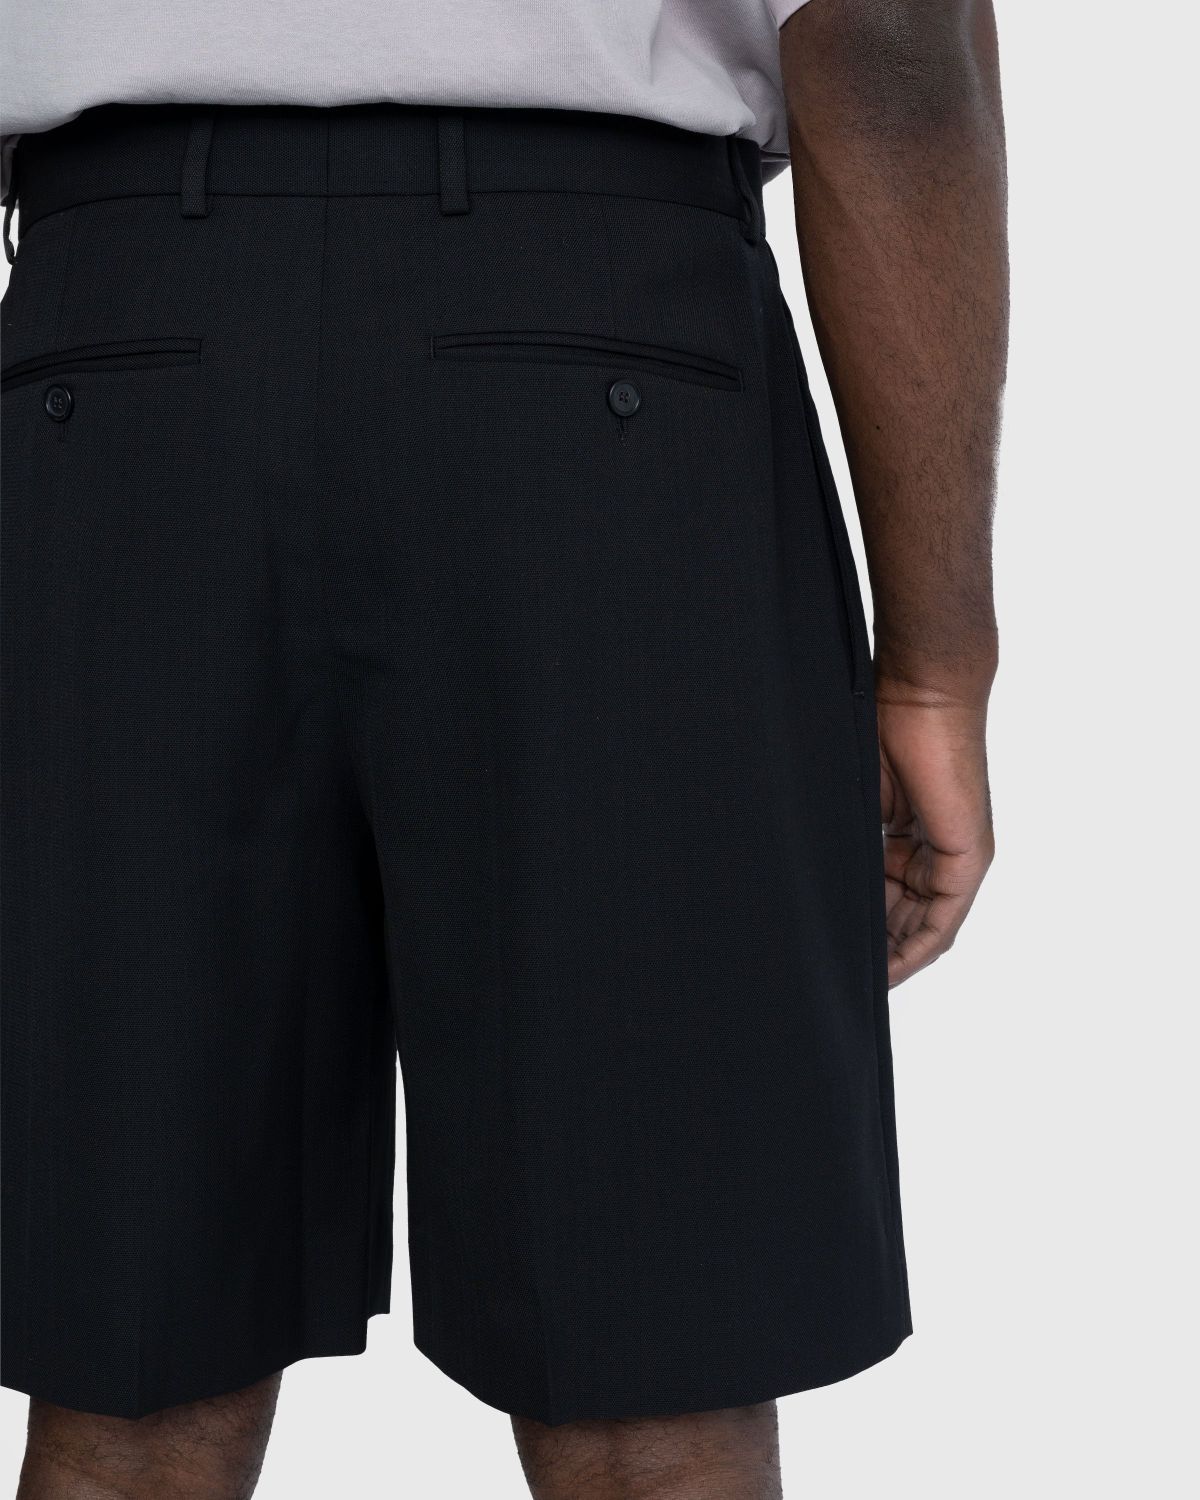 Acne Studios – Tailored Pleated Shorts Black - Bermuda Cuts - Black - Image 5